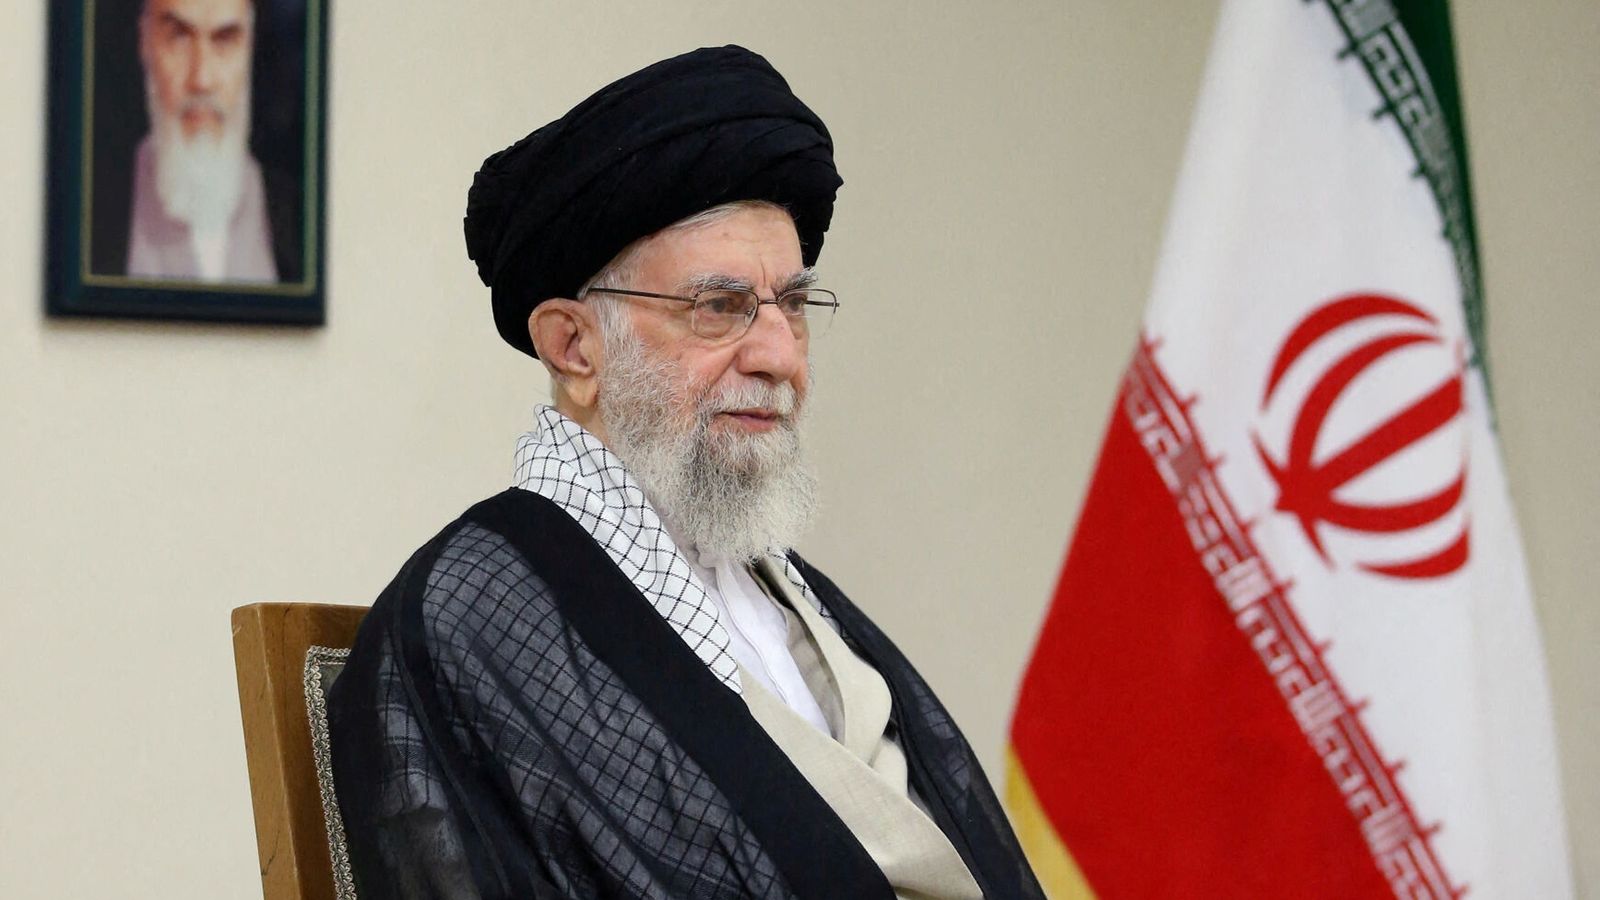 Sister of Iran’s Supreme Leader Ayatollah Ali Khamenei condemns his ‘despotic caliphate’ | World News